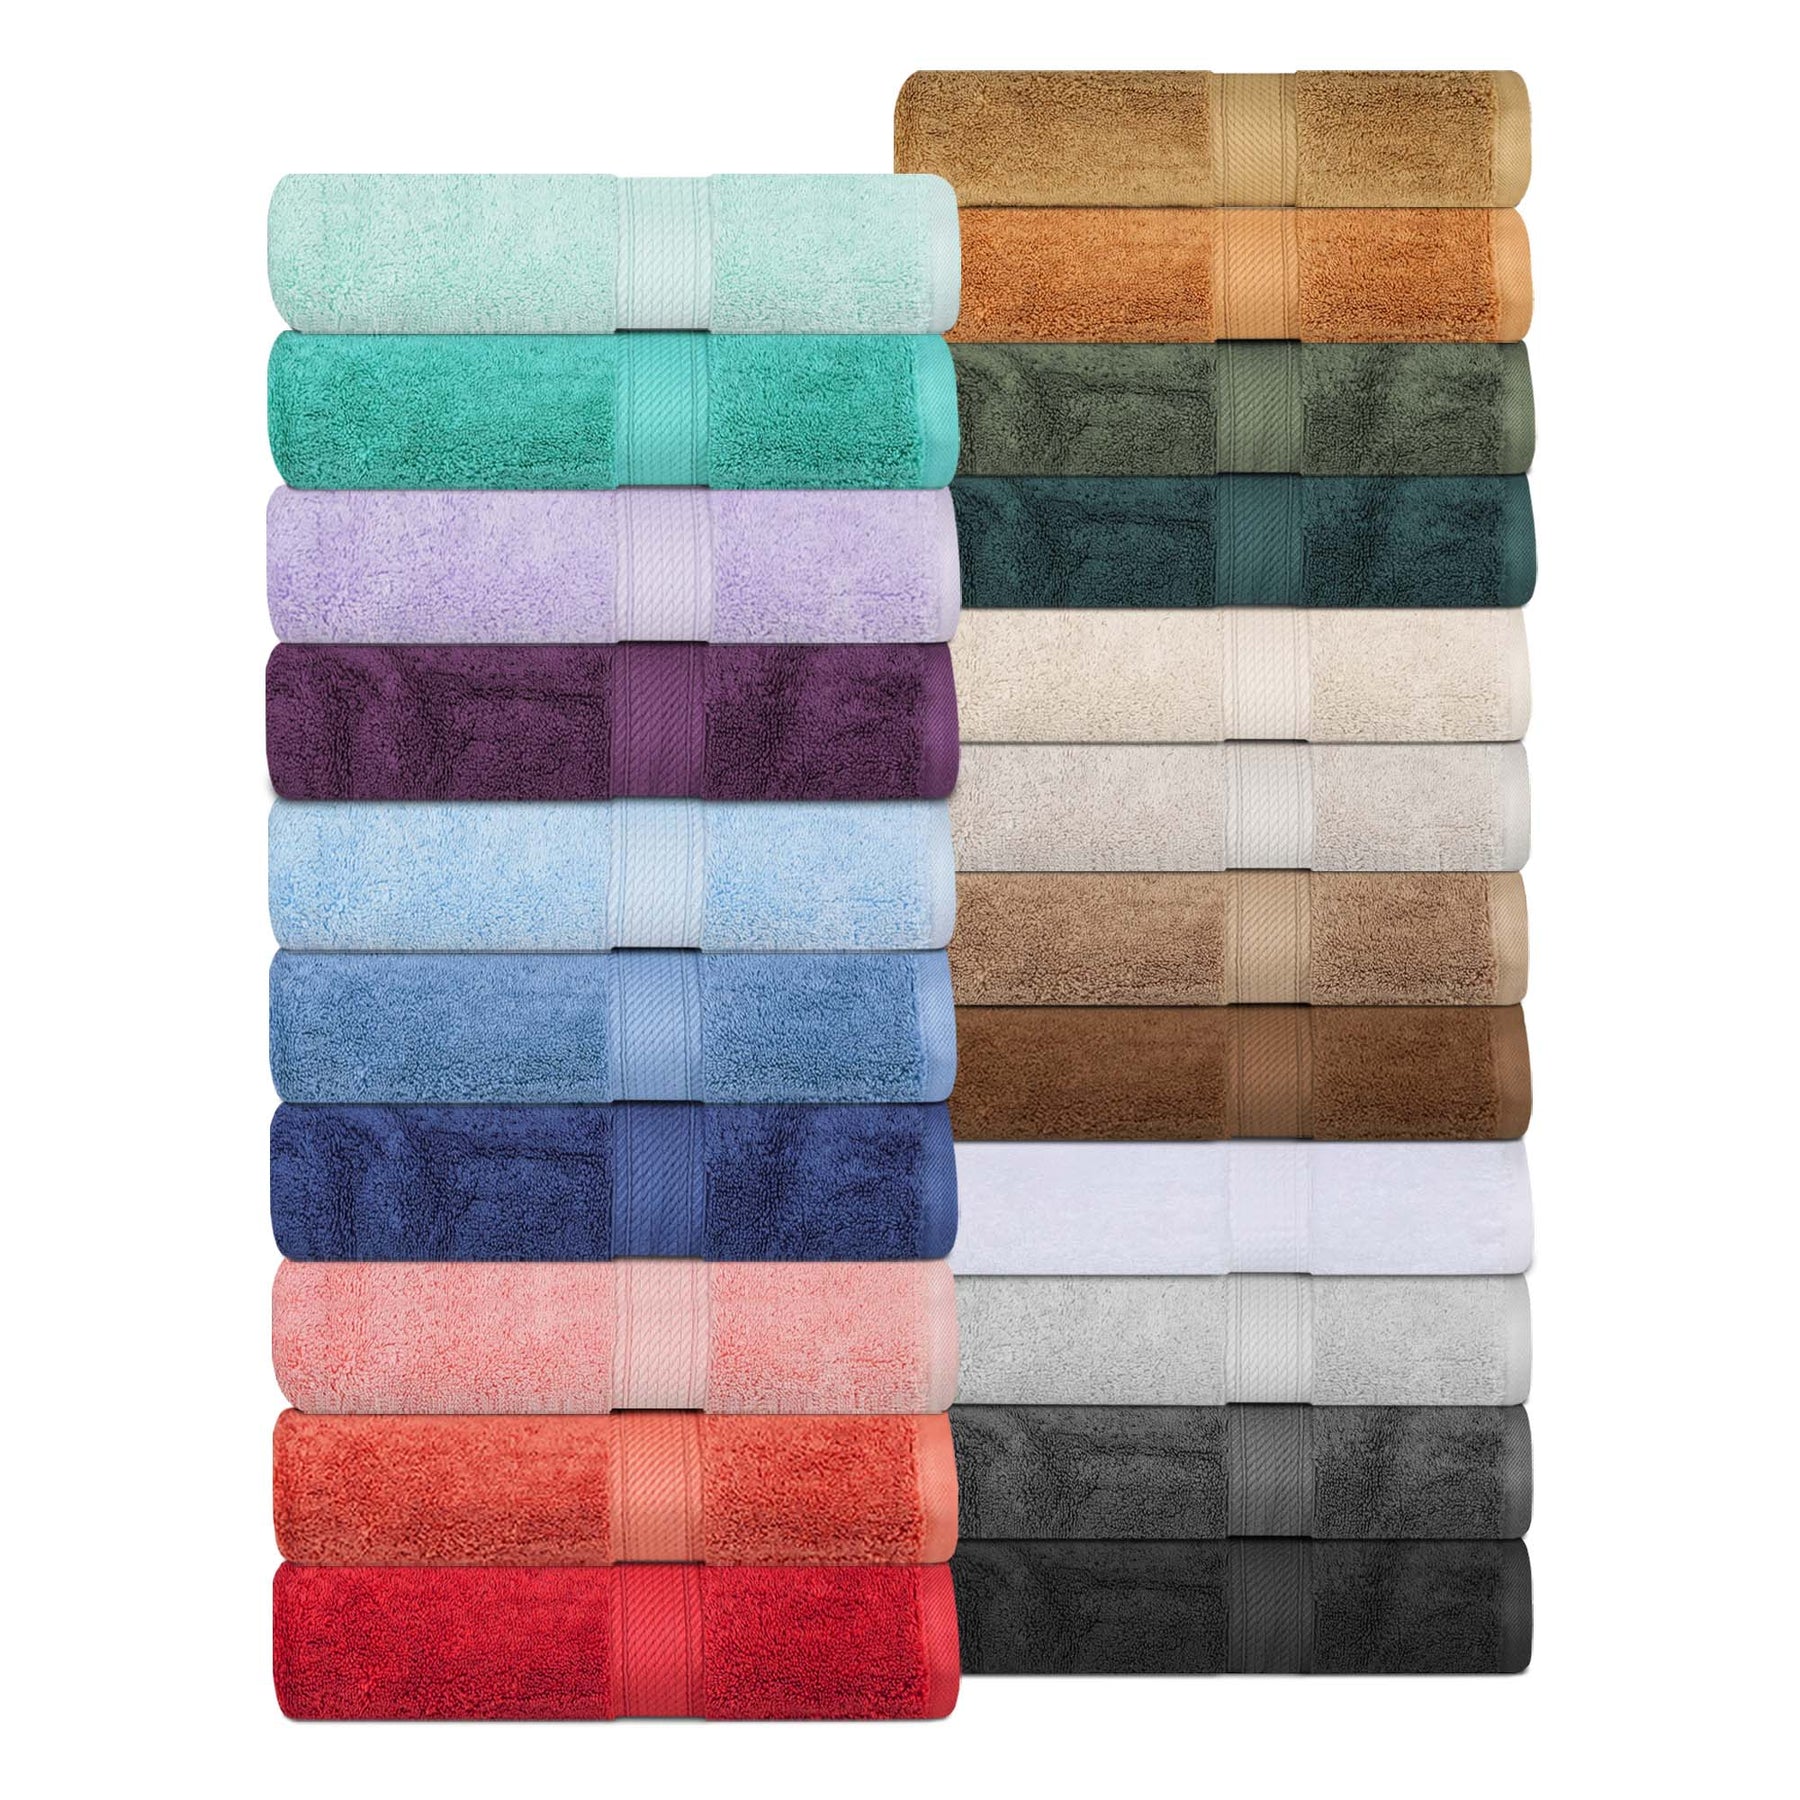 Egyptian Cotton Heavyweight 10 Piece Bath Towel Set - Sea Foam